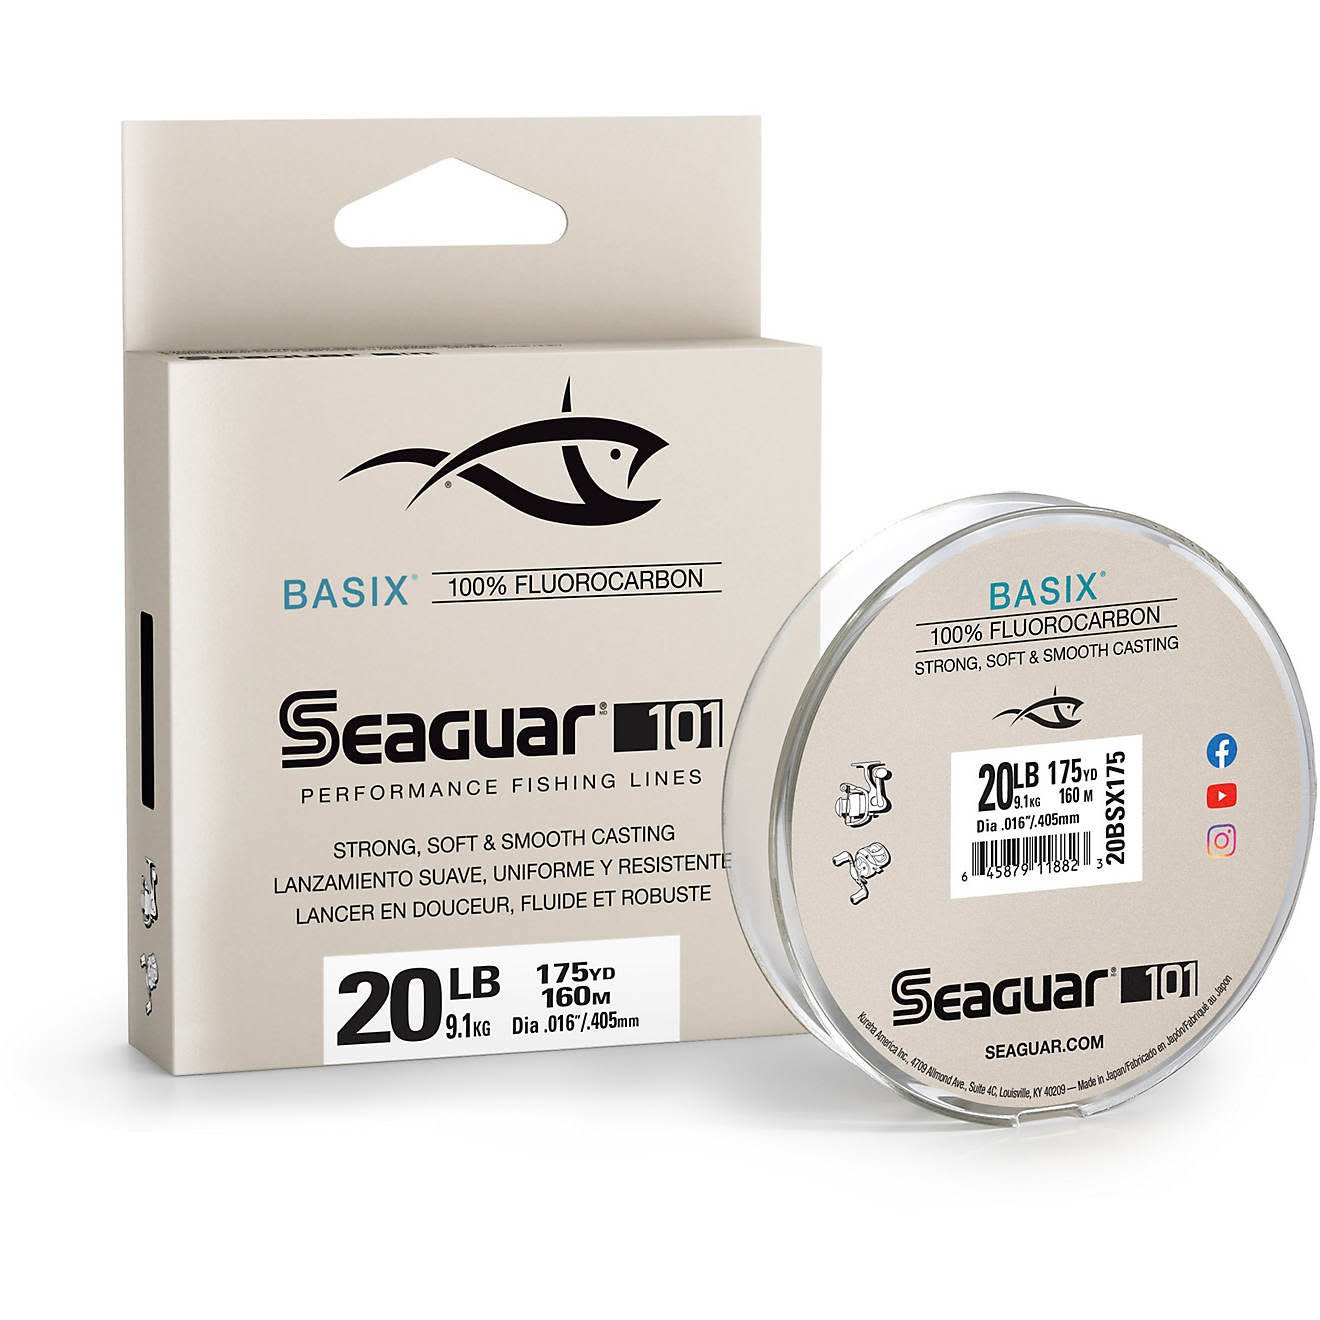 Seaguar101 BasiX Fluorocarbon - Hamilton Bait and Tackle